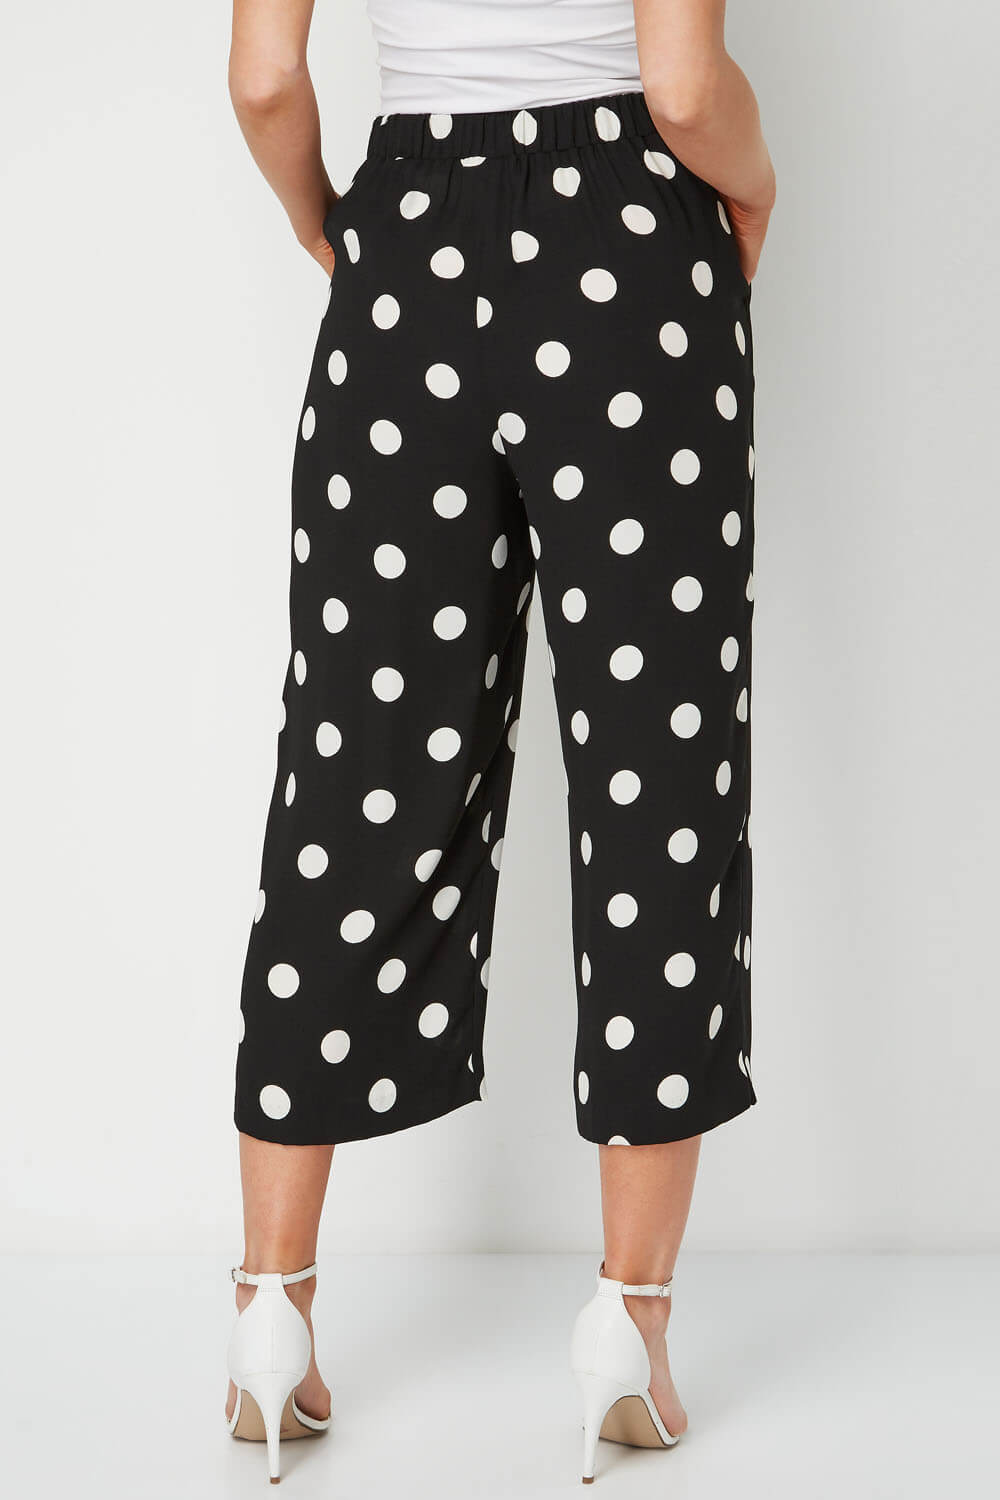 Black Polka Dot Culotte Trousers, Image 3 of 5